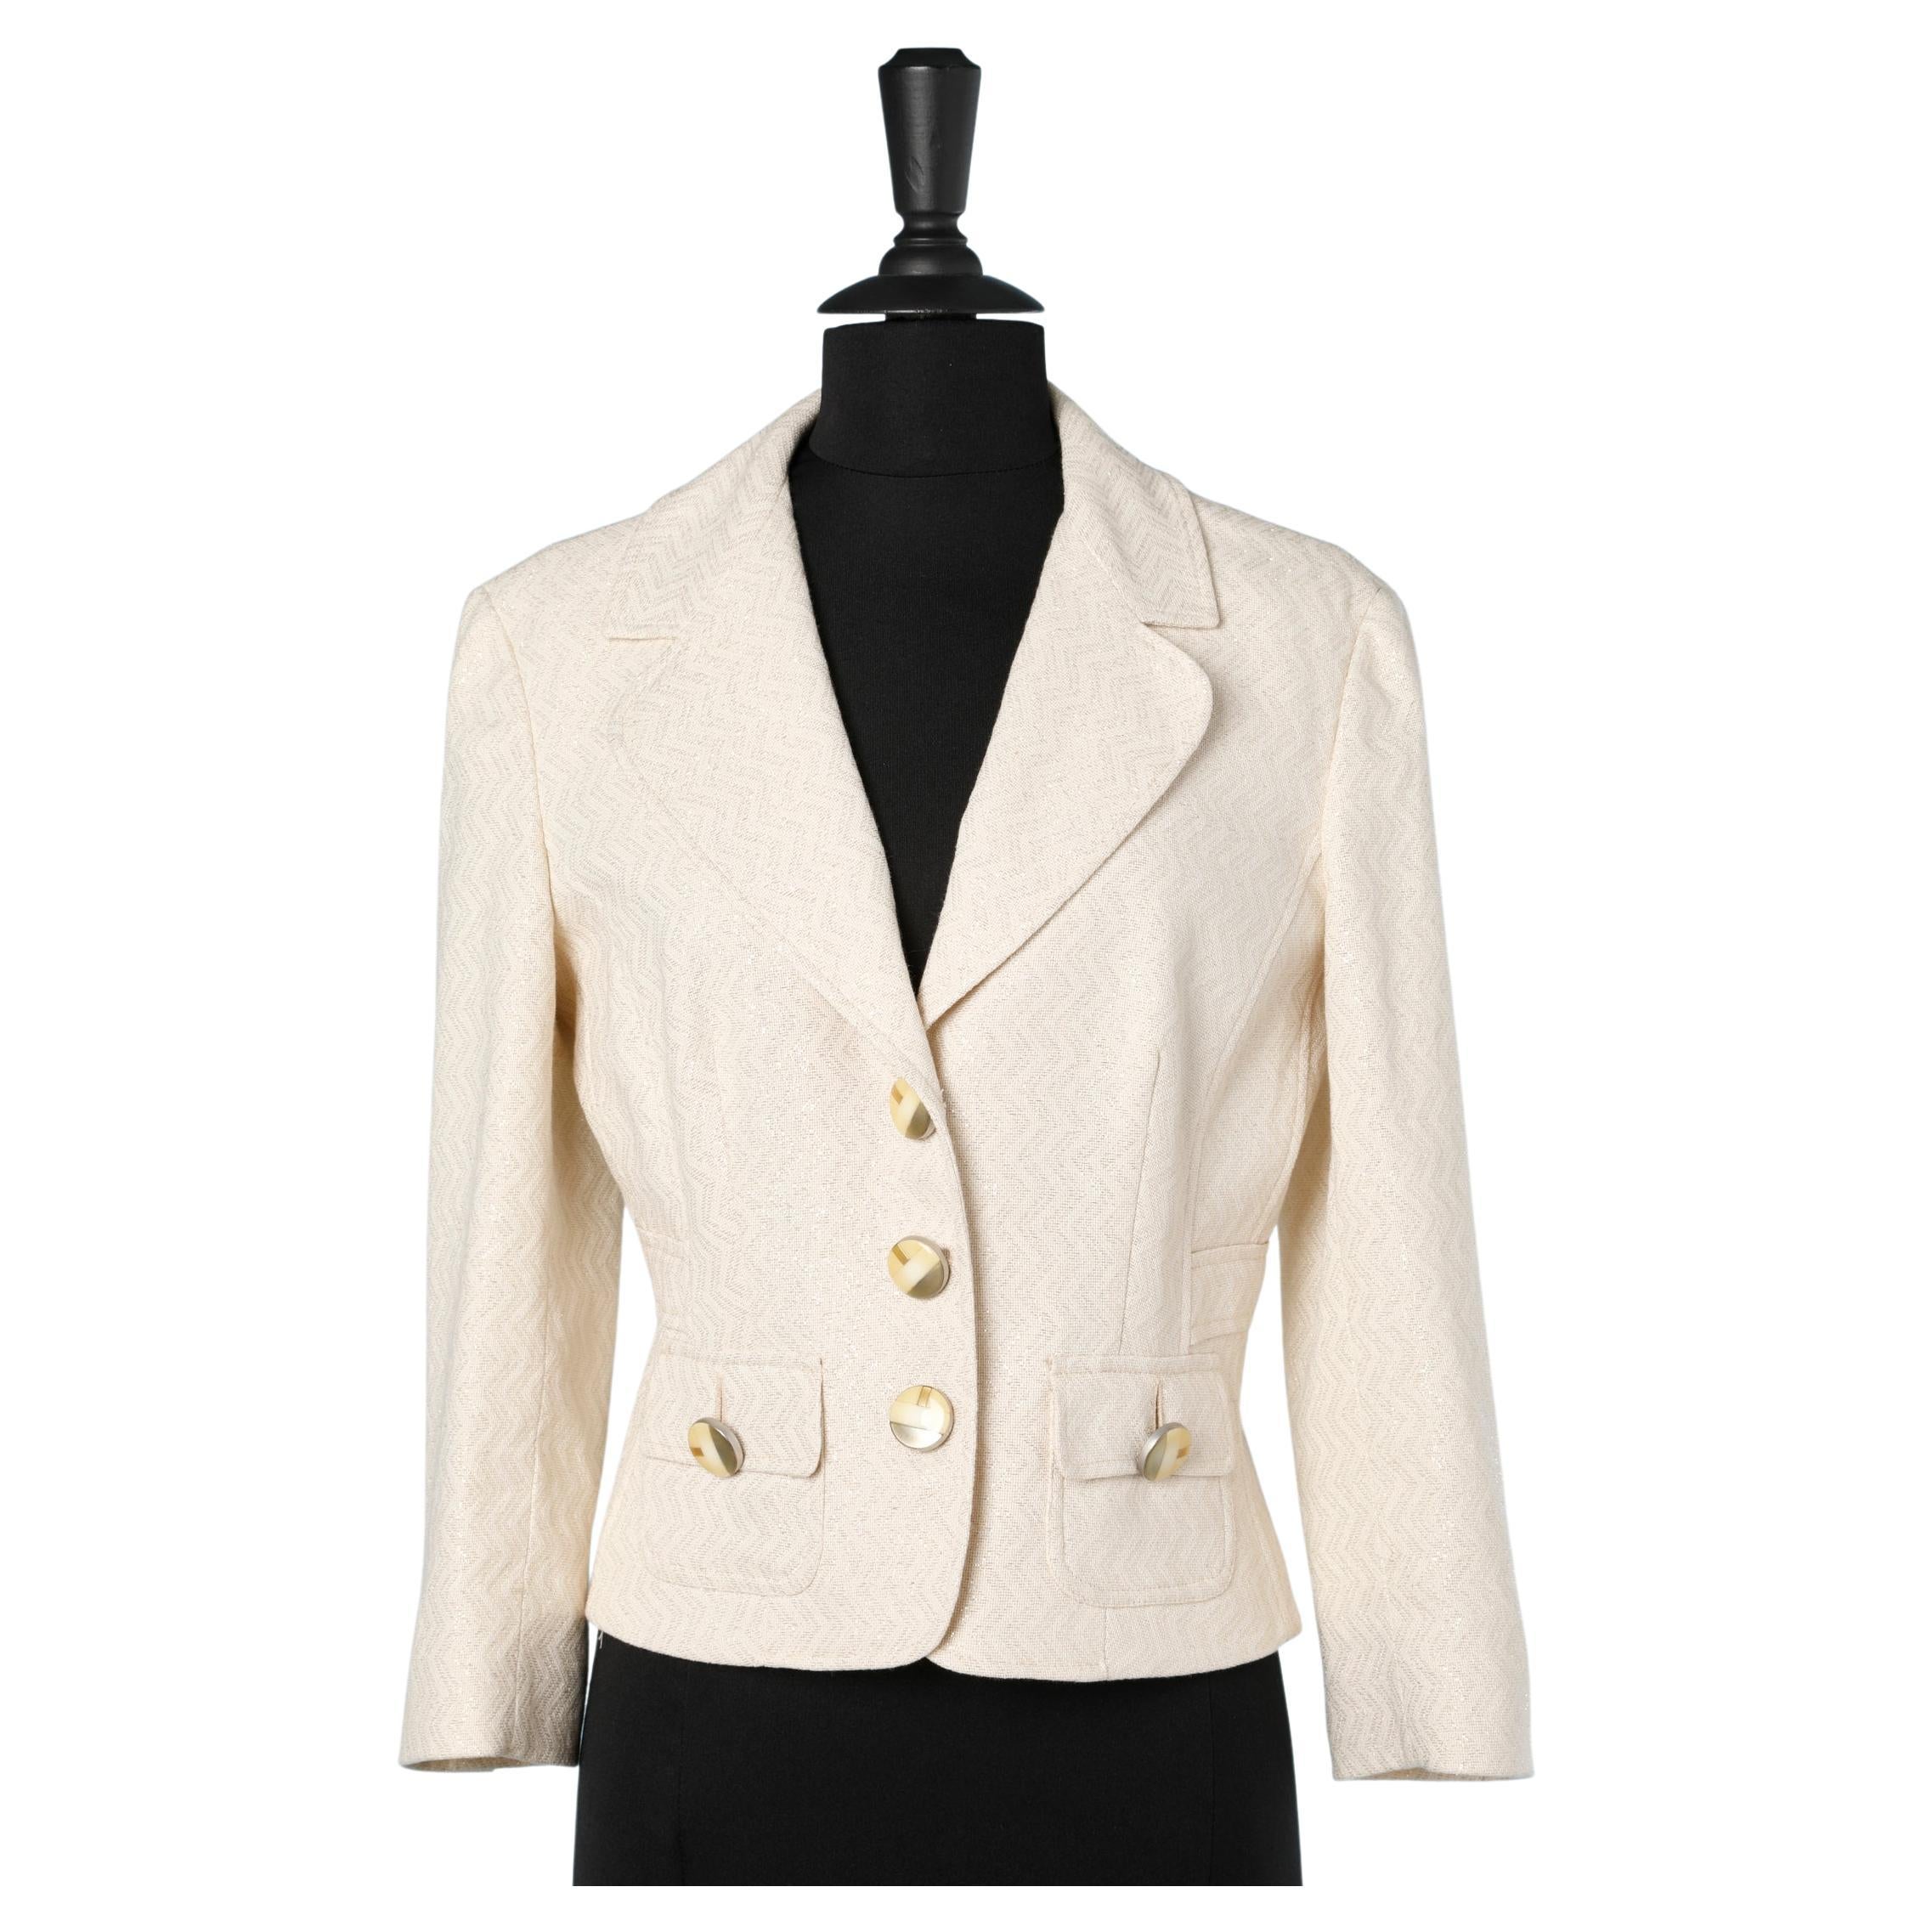 Off-white cotton & lurex jacket with chevron pattern D&G by Dolce & Gabbana 